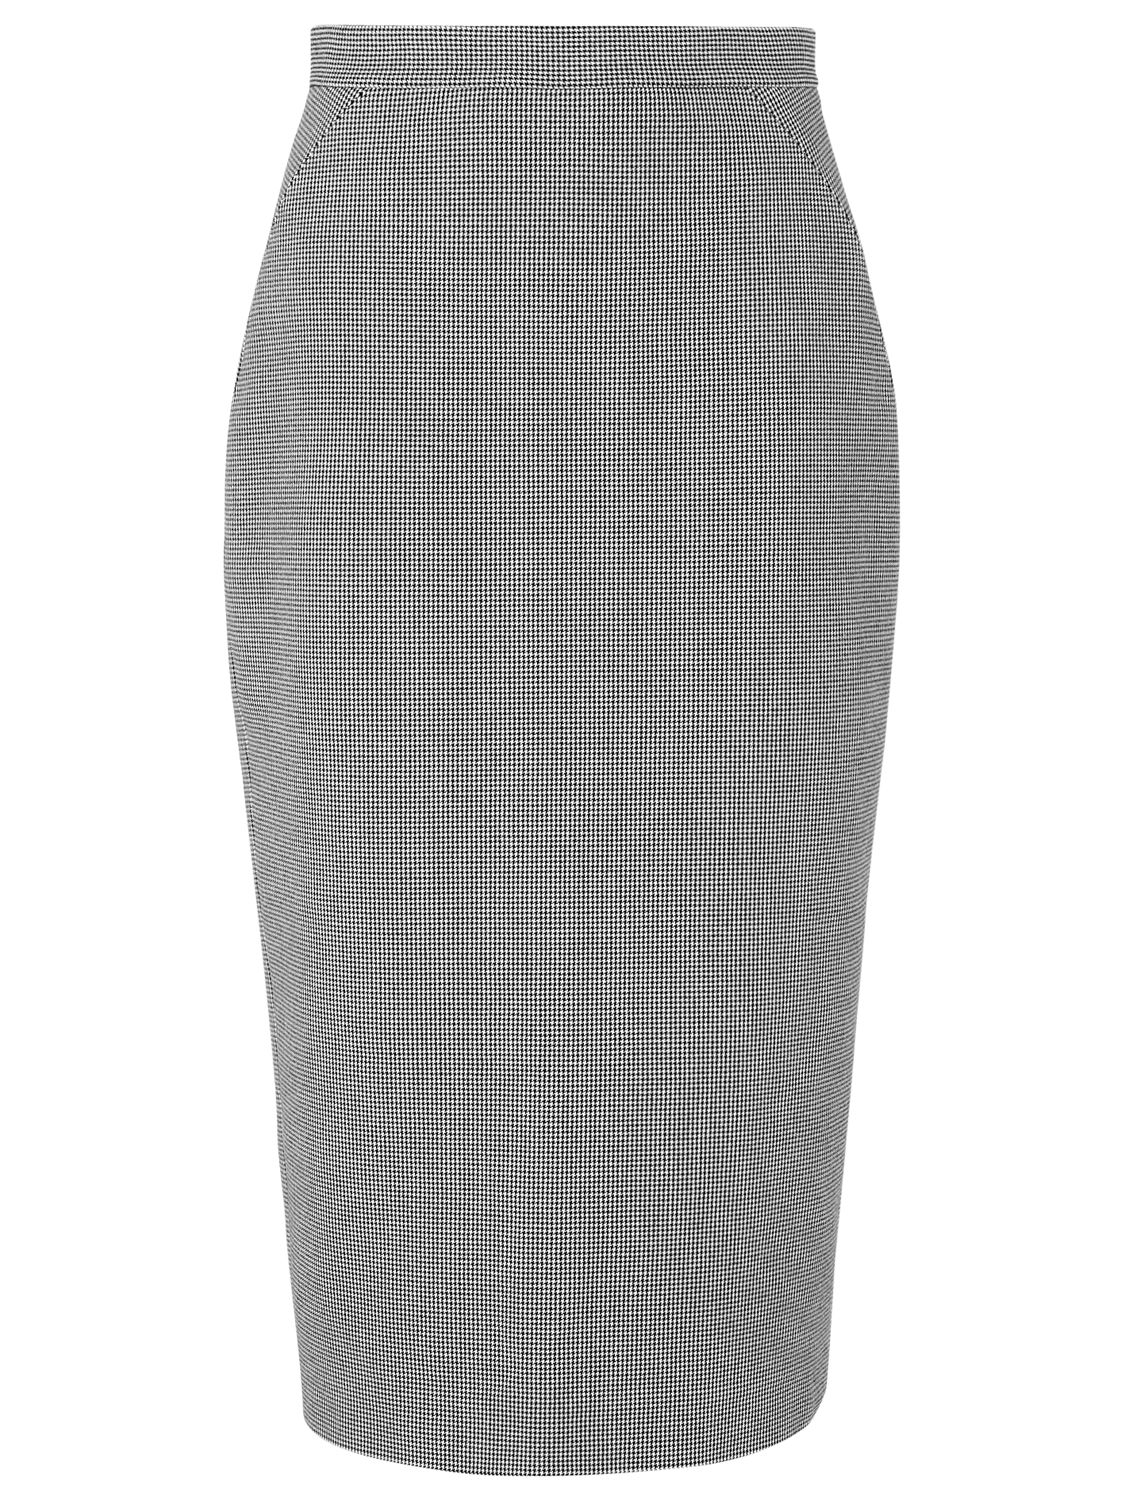 Women's Skirts | Maxi, Pencil & A-Line Skirts | John Lewis